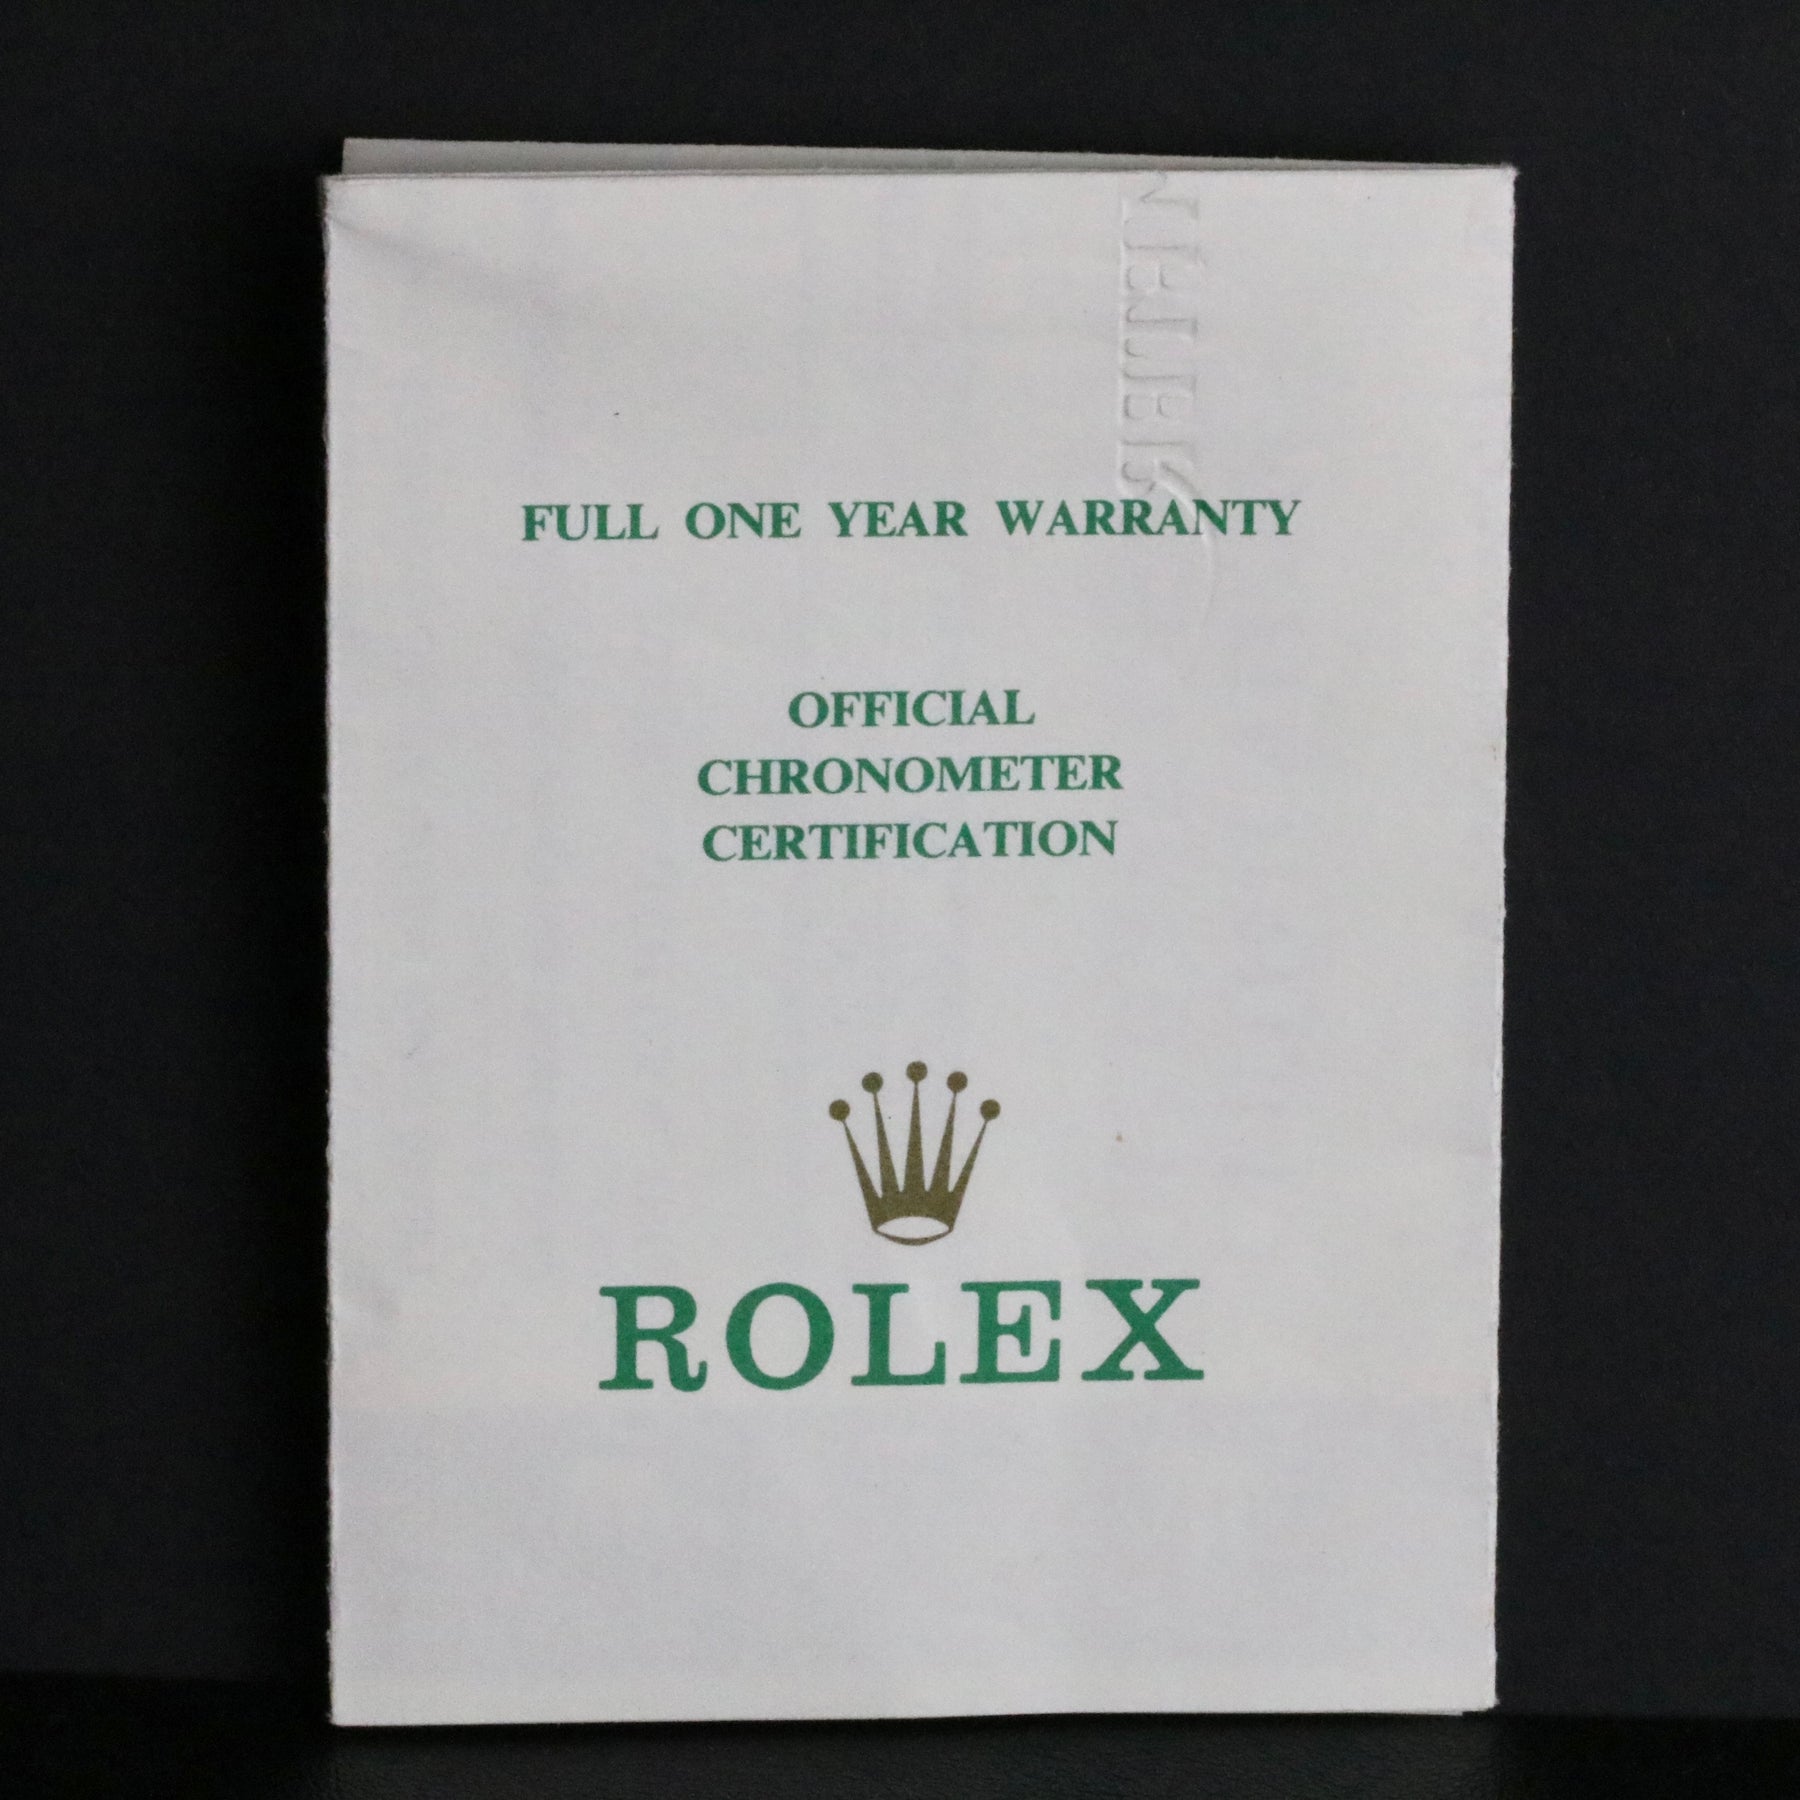 1975 Rolex 16013 SS/YG Datejust Diamond Dial